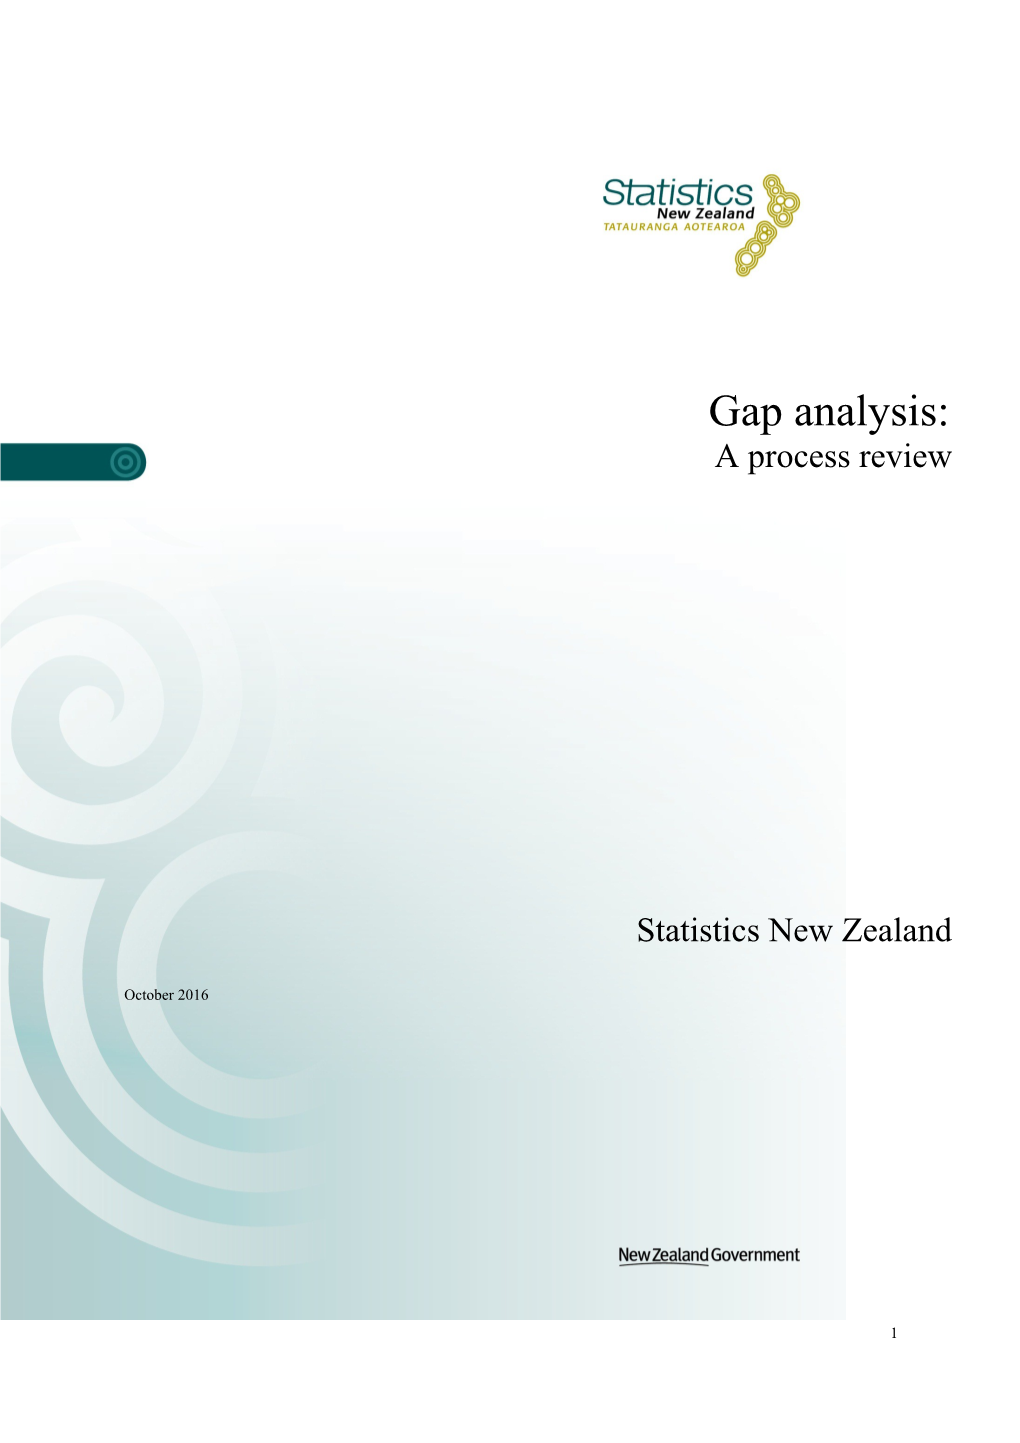 Gap Analysis: a Process Review